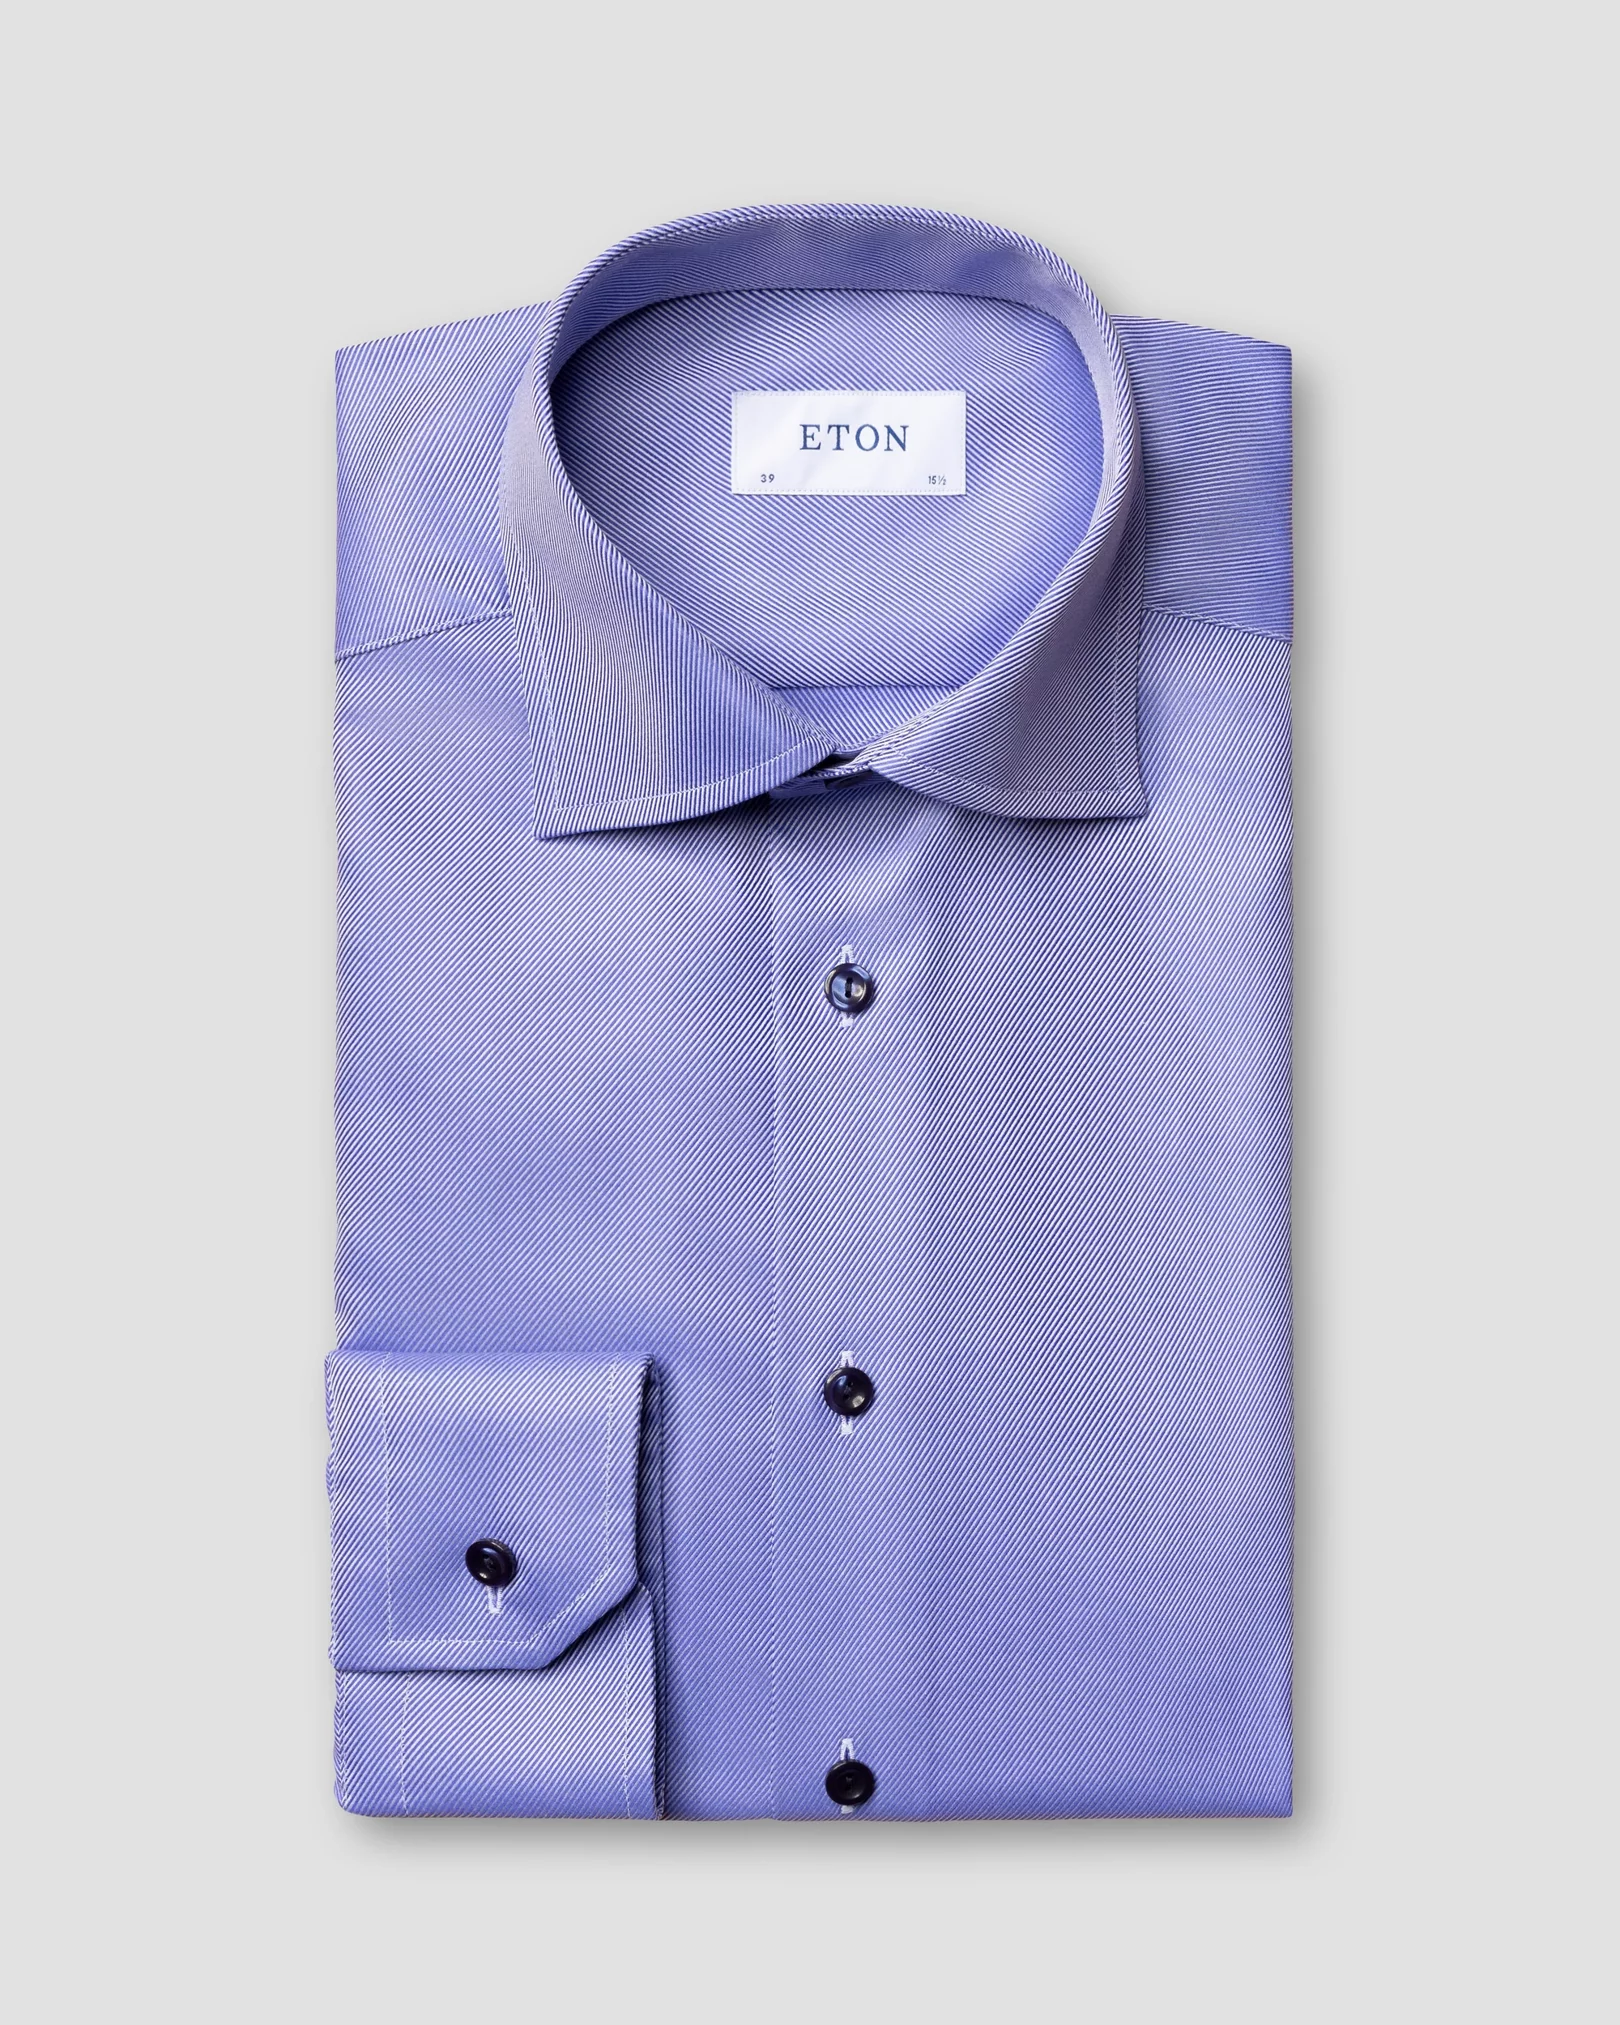 Eton - blue textured twill shirt